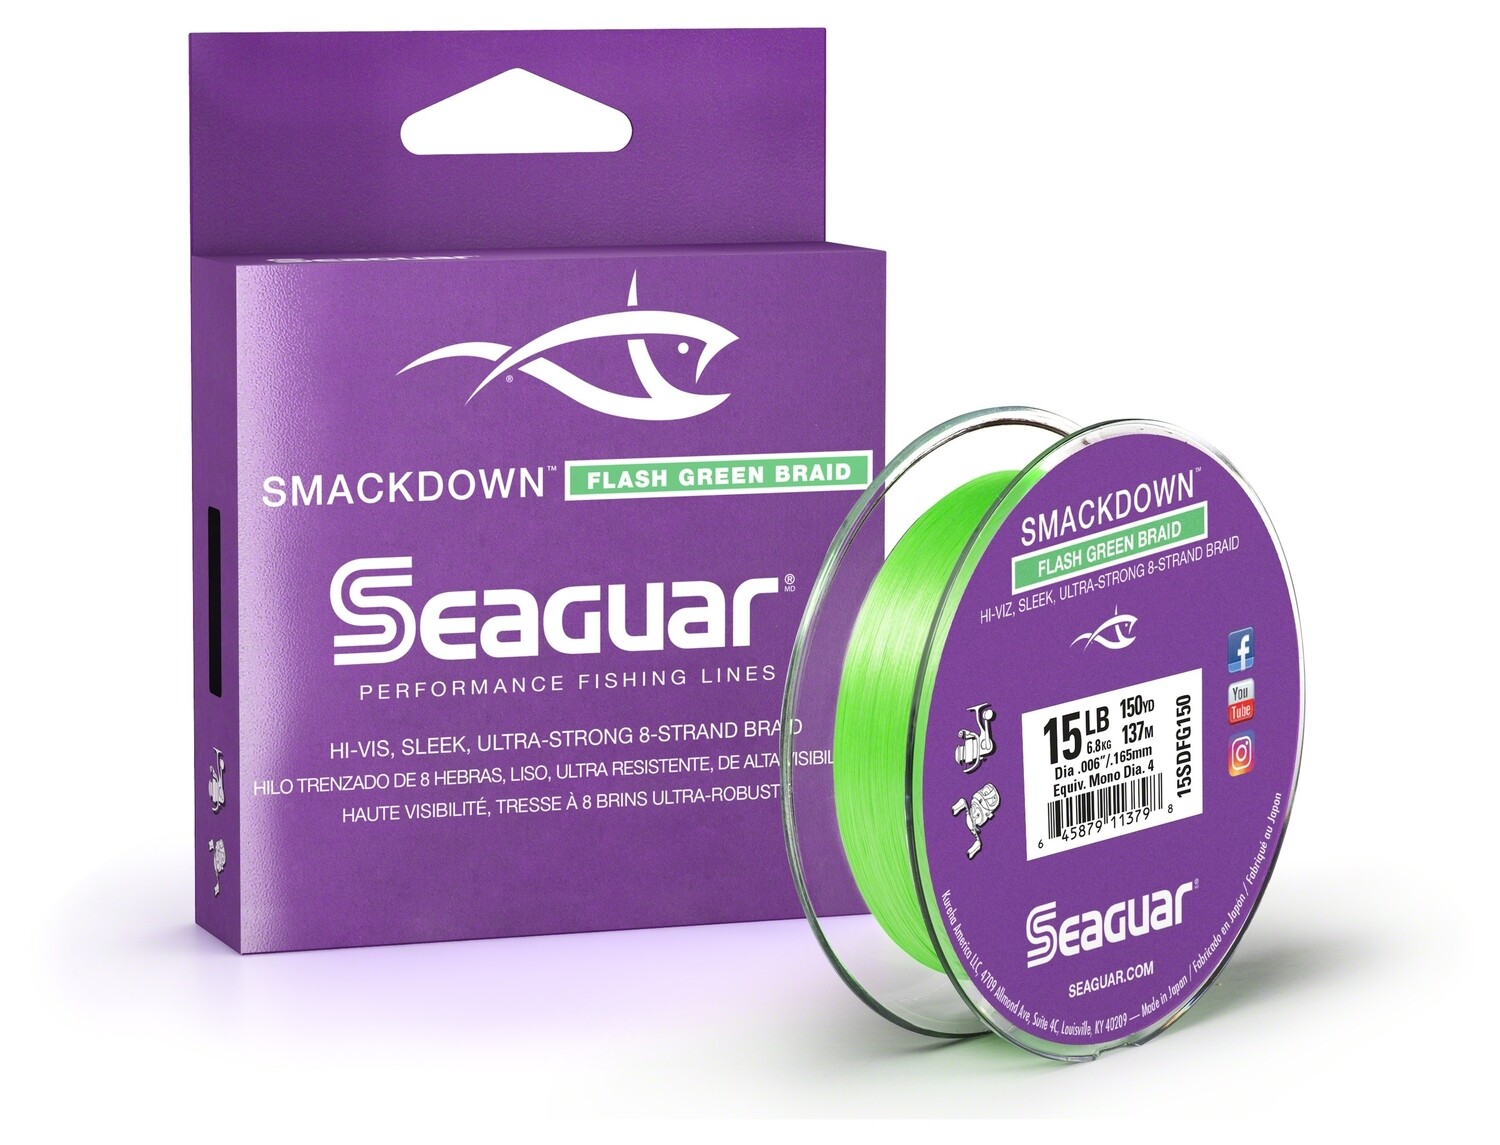 Seaguar 30SDFG150 Smackdown Braided Line Flash Green 30lb 150yd